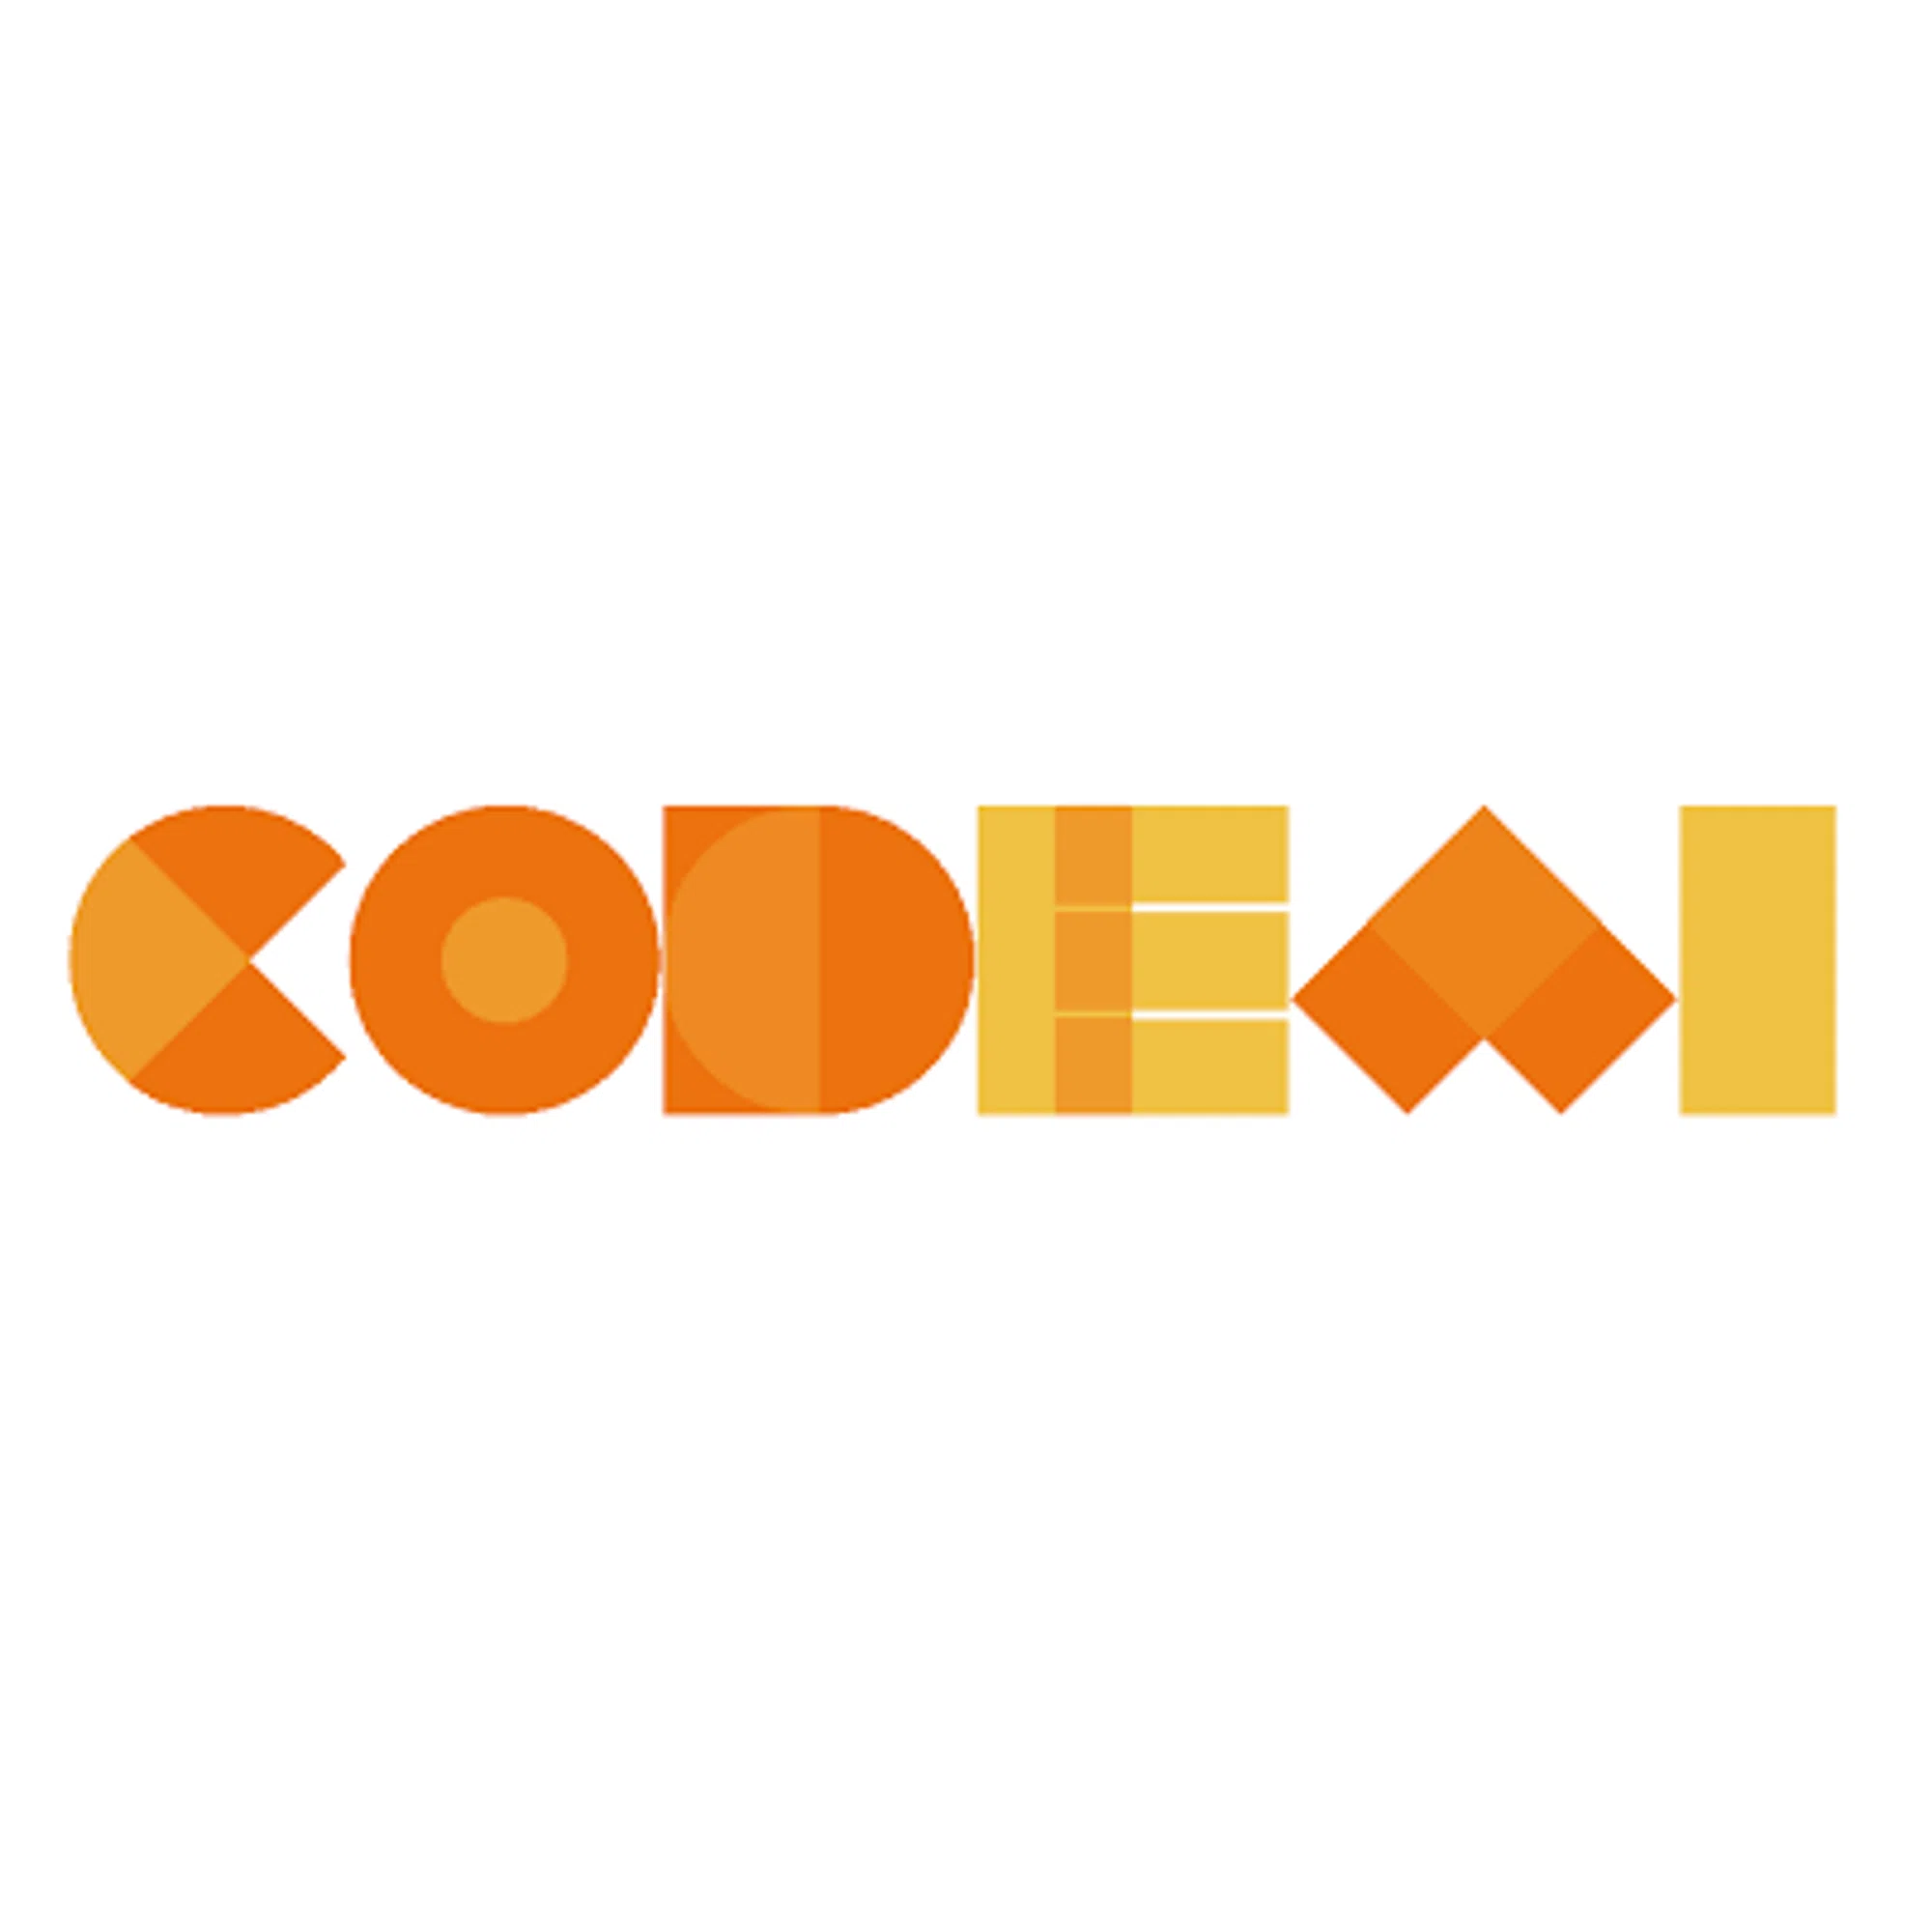 codeai.studio logo